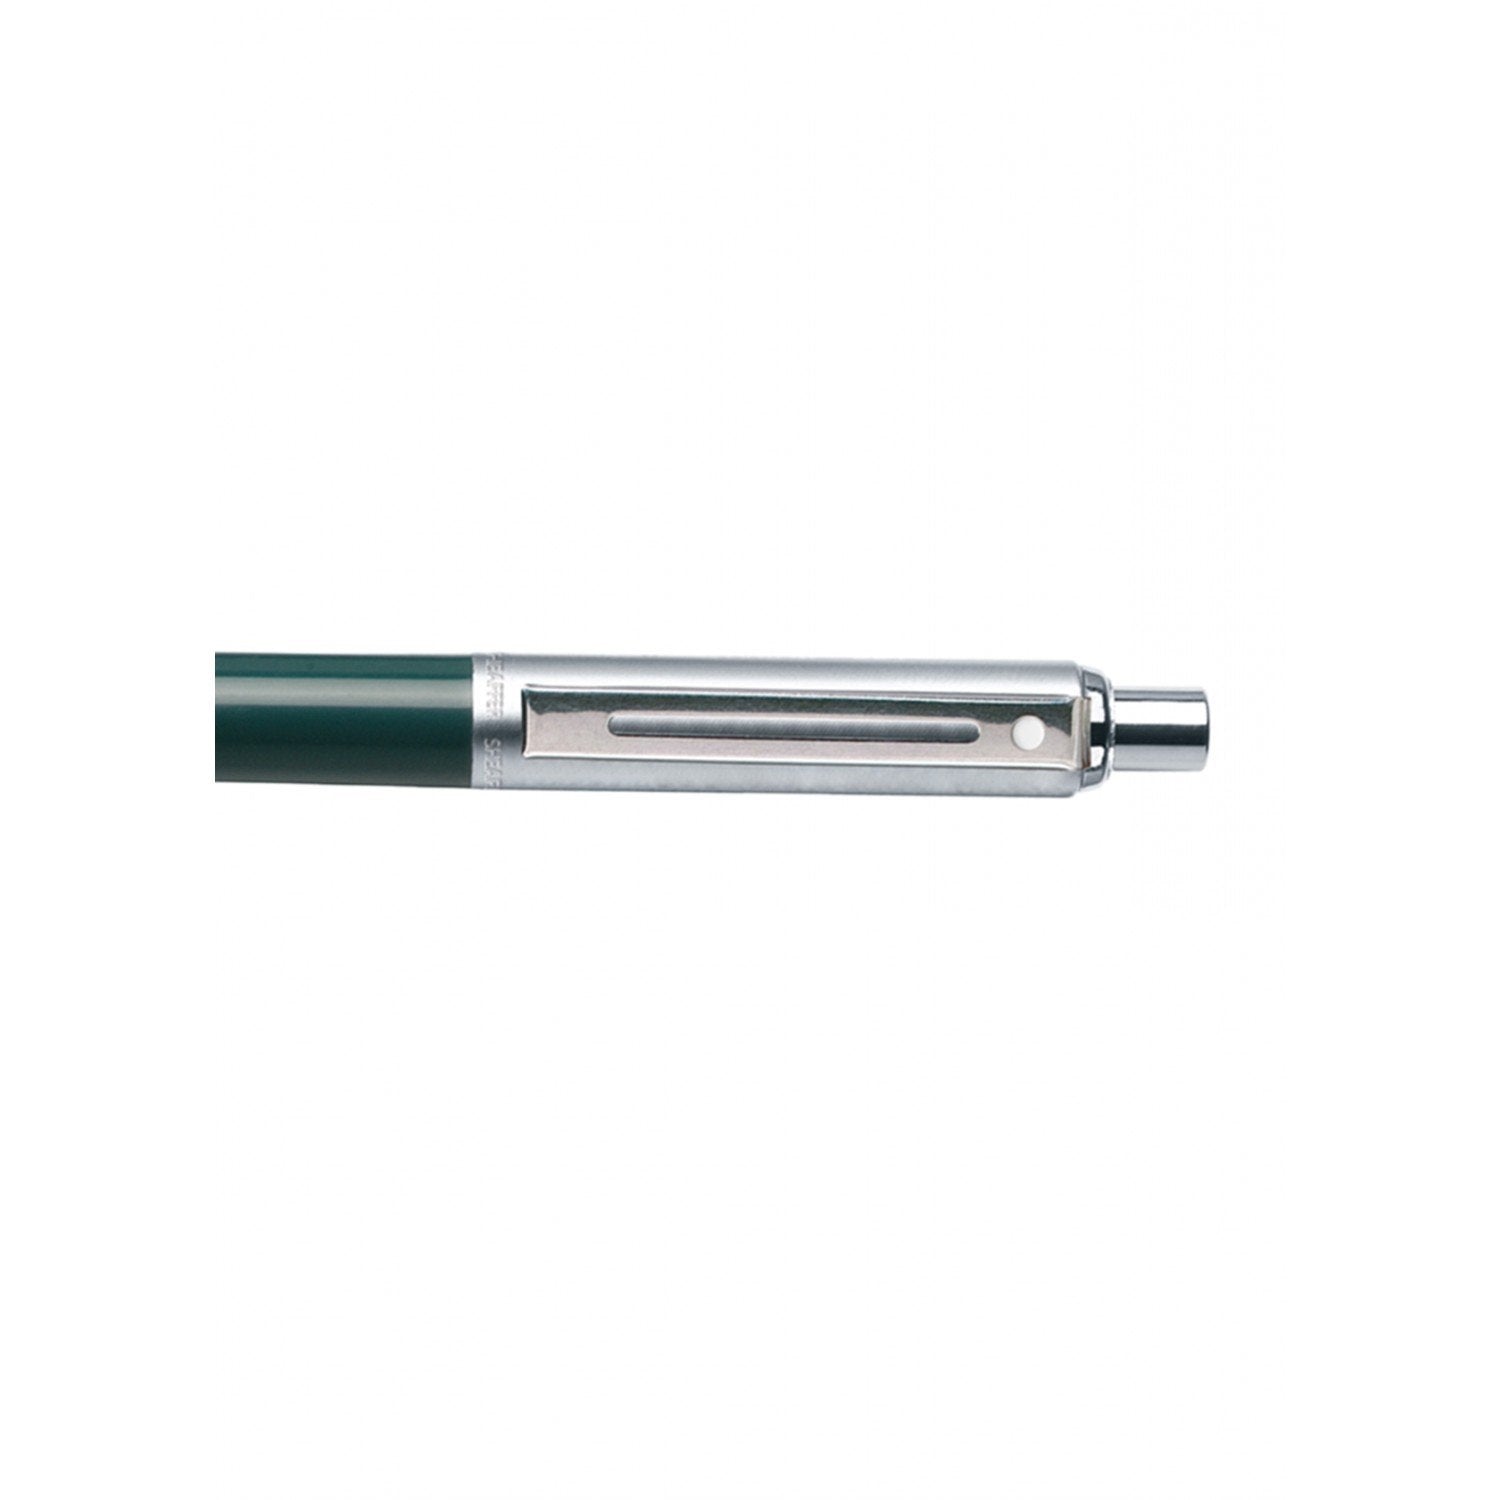 Sheaffer® Sentinel Dark Green and Chrome Ballpoint Pen With Chrome Trims